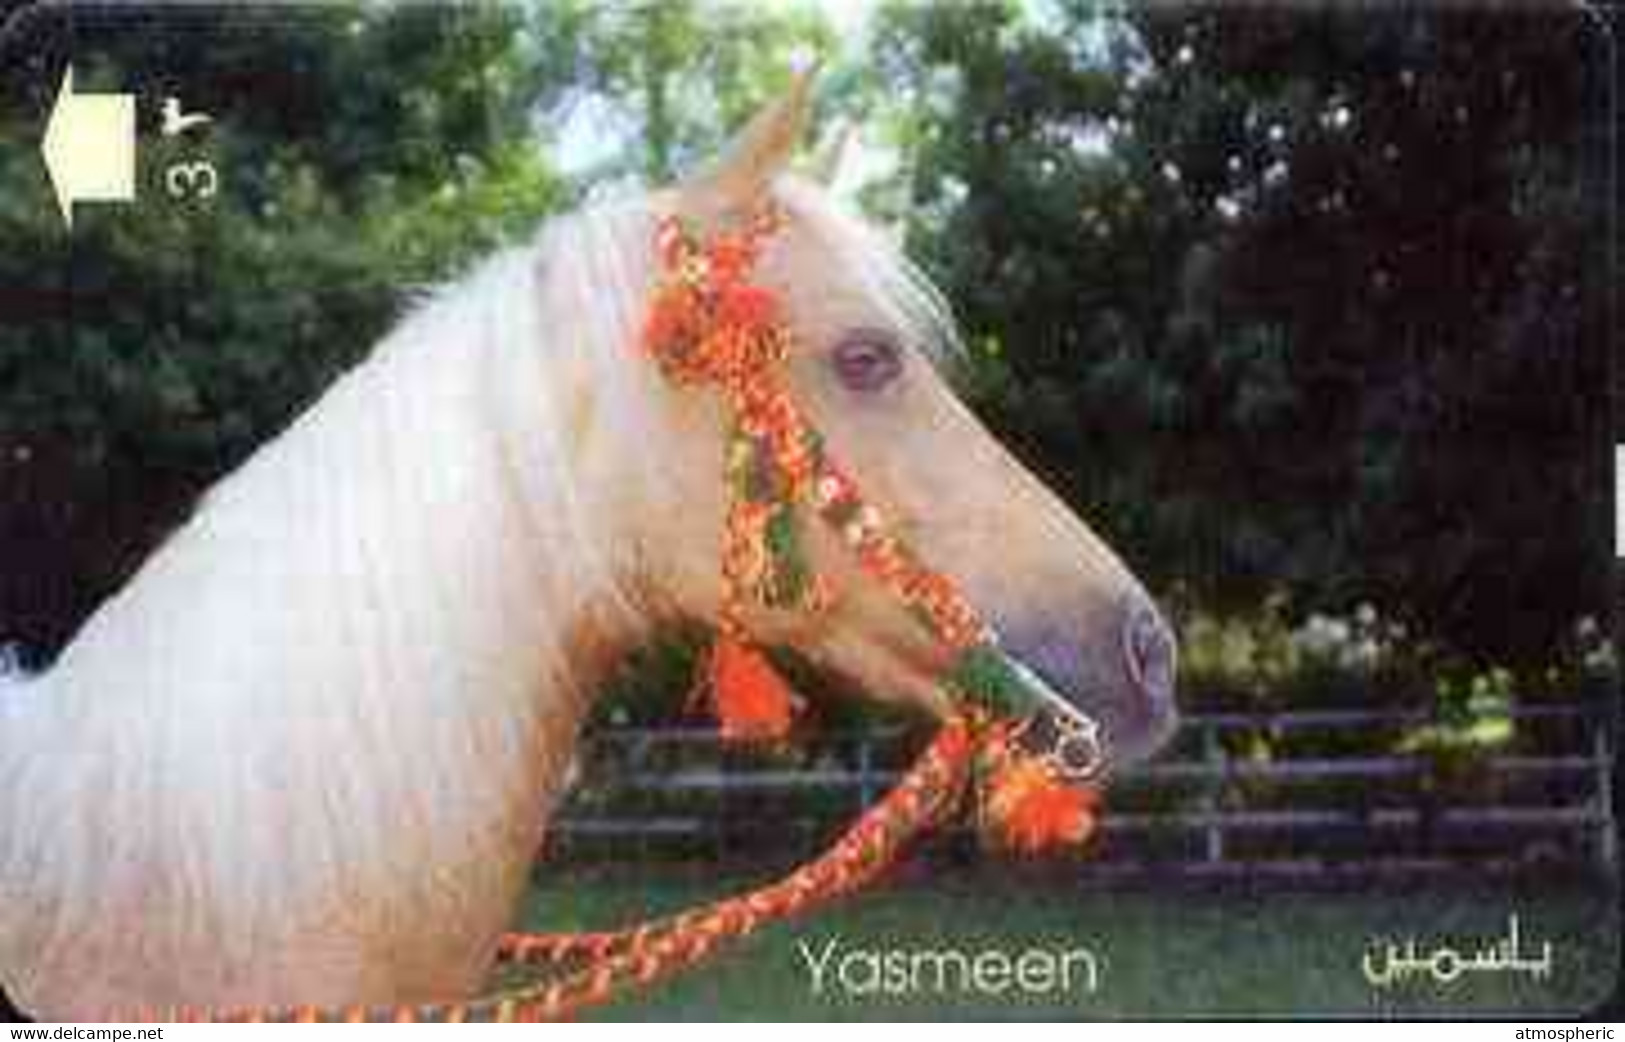 Telephone Card -Oman 3r Phone Card Showing Horse (Yasmeen) - Horses